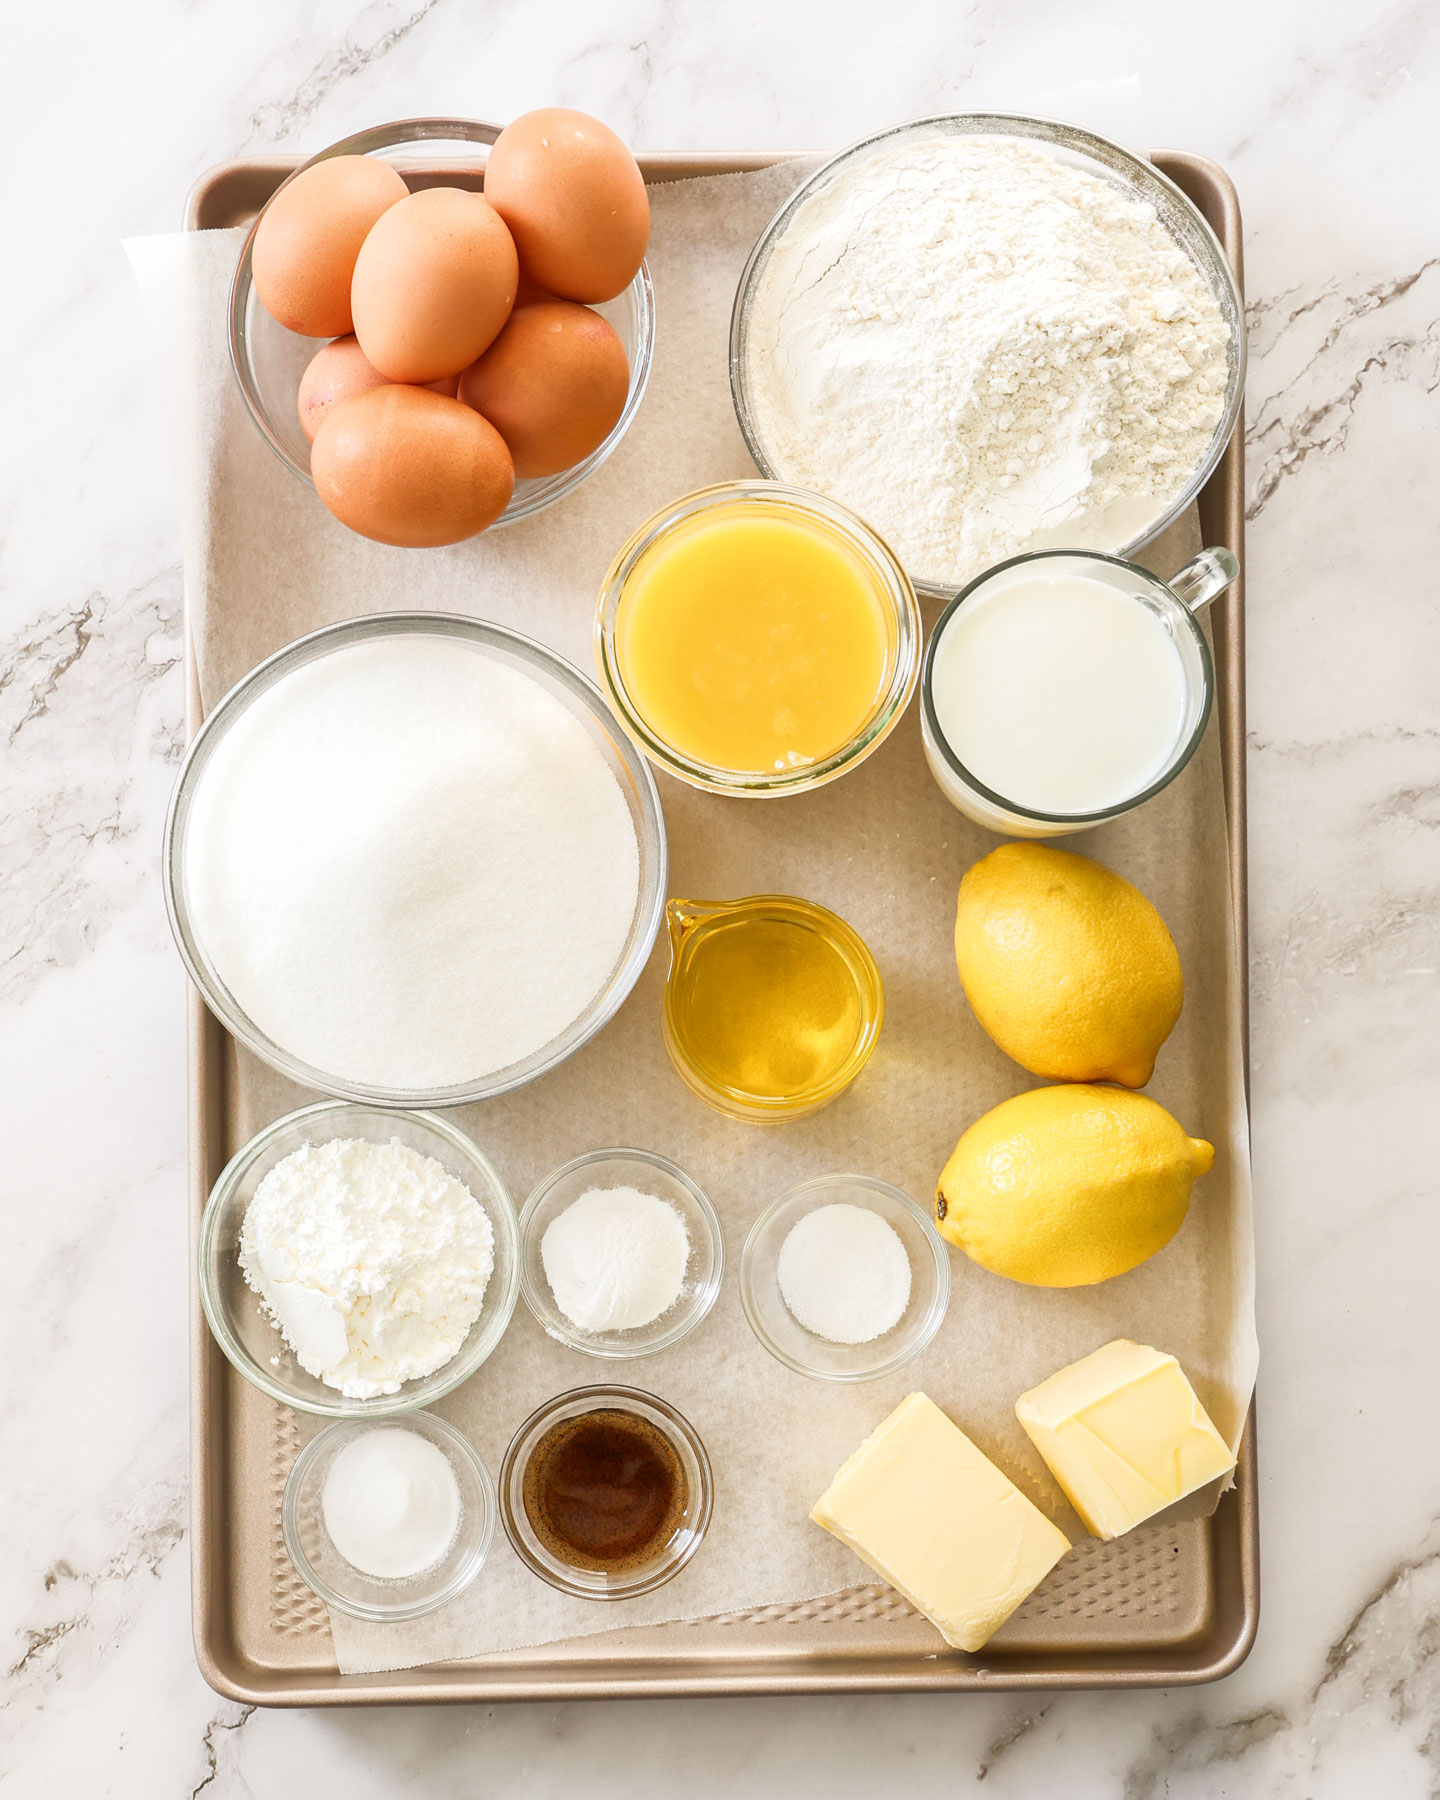 Ingredients for lemon meringue cake on a baking tray.